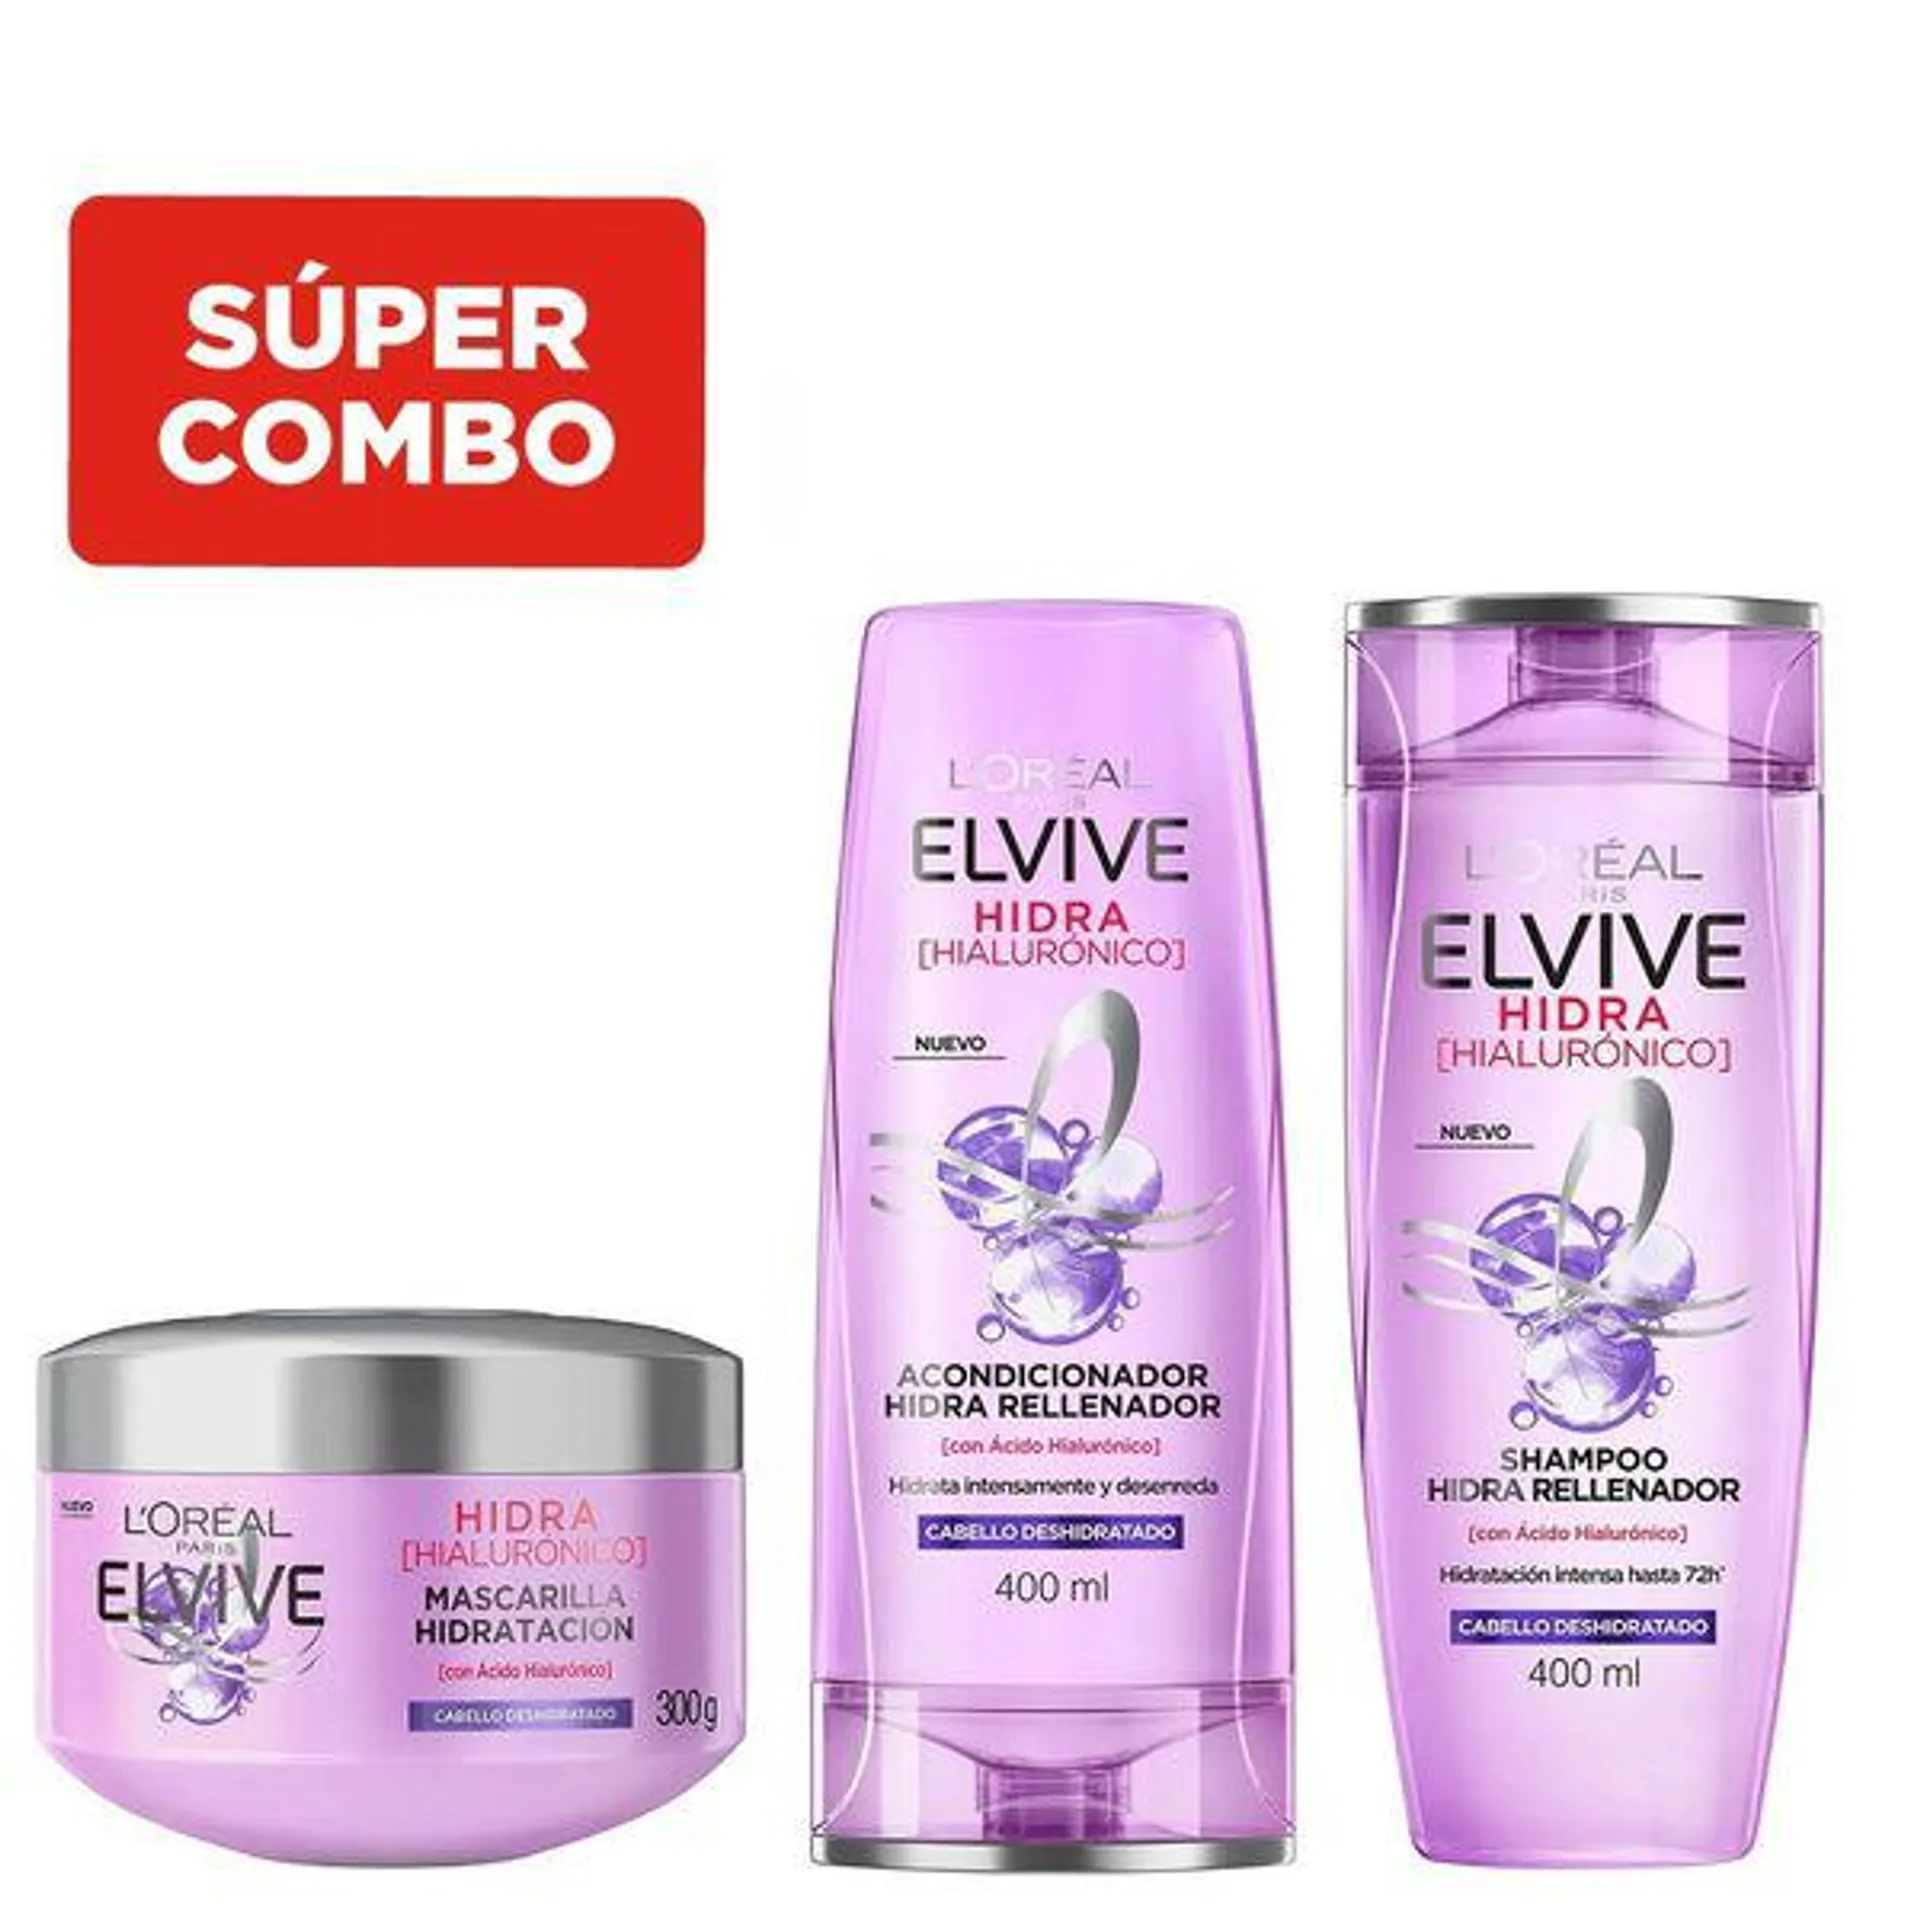 Combo Elvive Hidra Hialurónico Shampoo x 400 ml + Acondicionador x 400 ml + Tratamiento Capilar x 300 ml